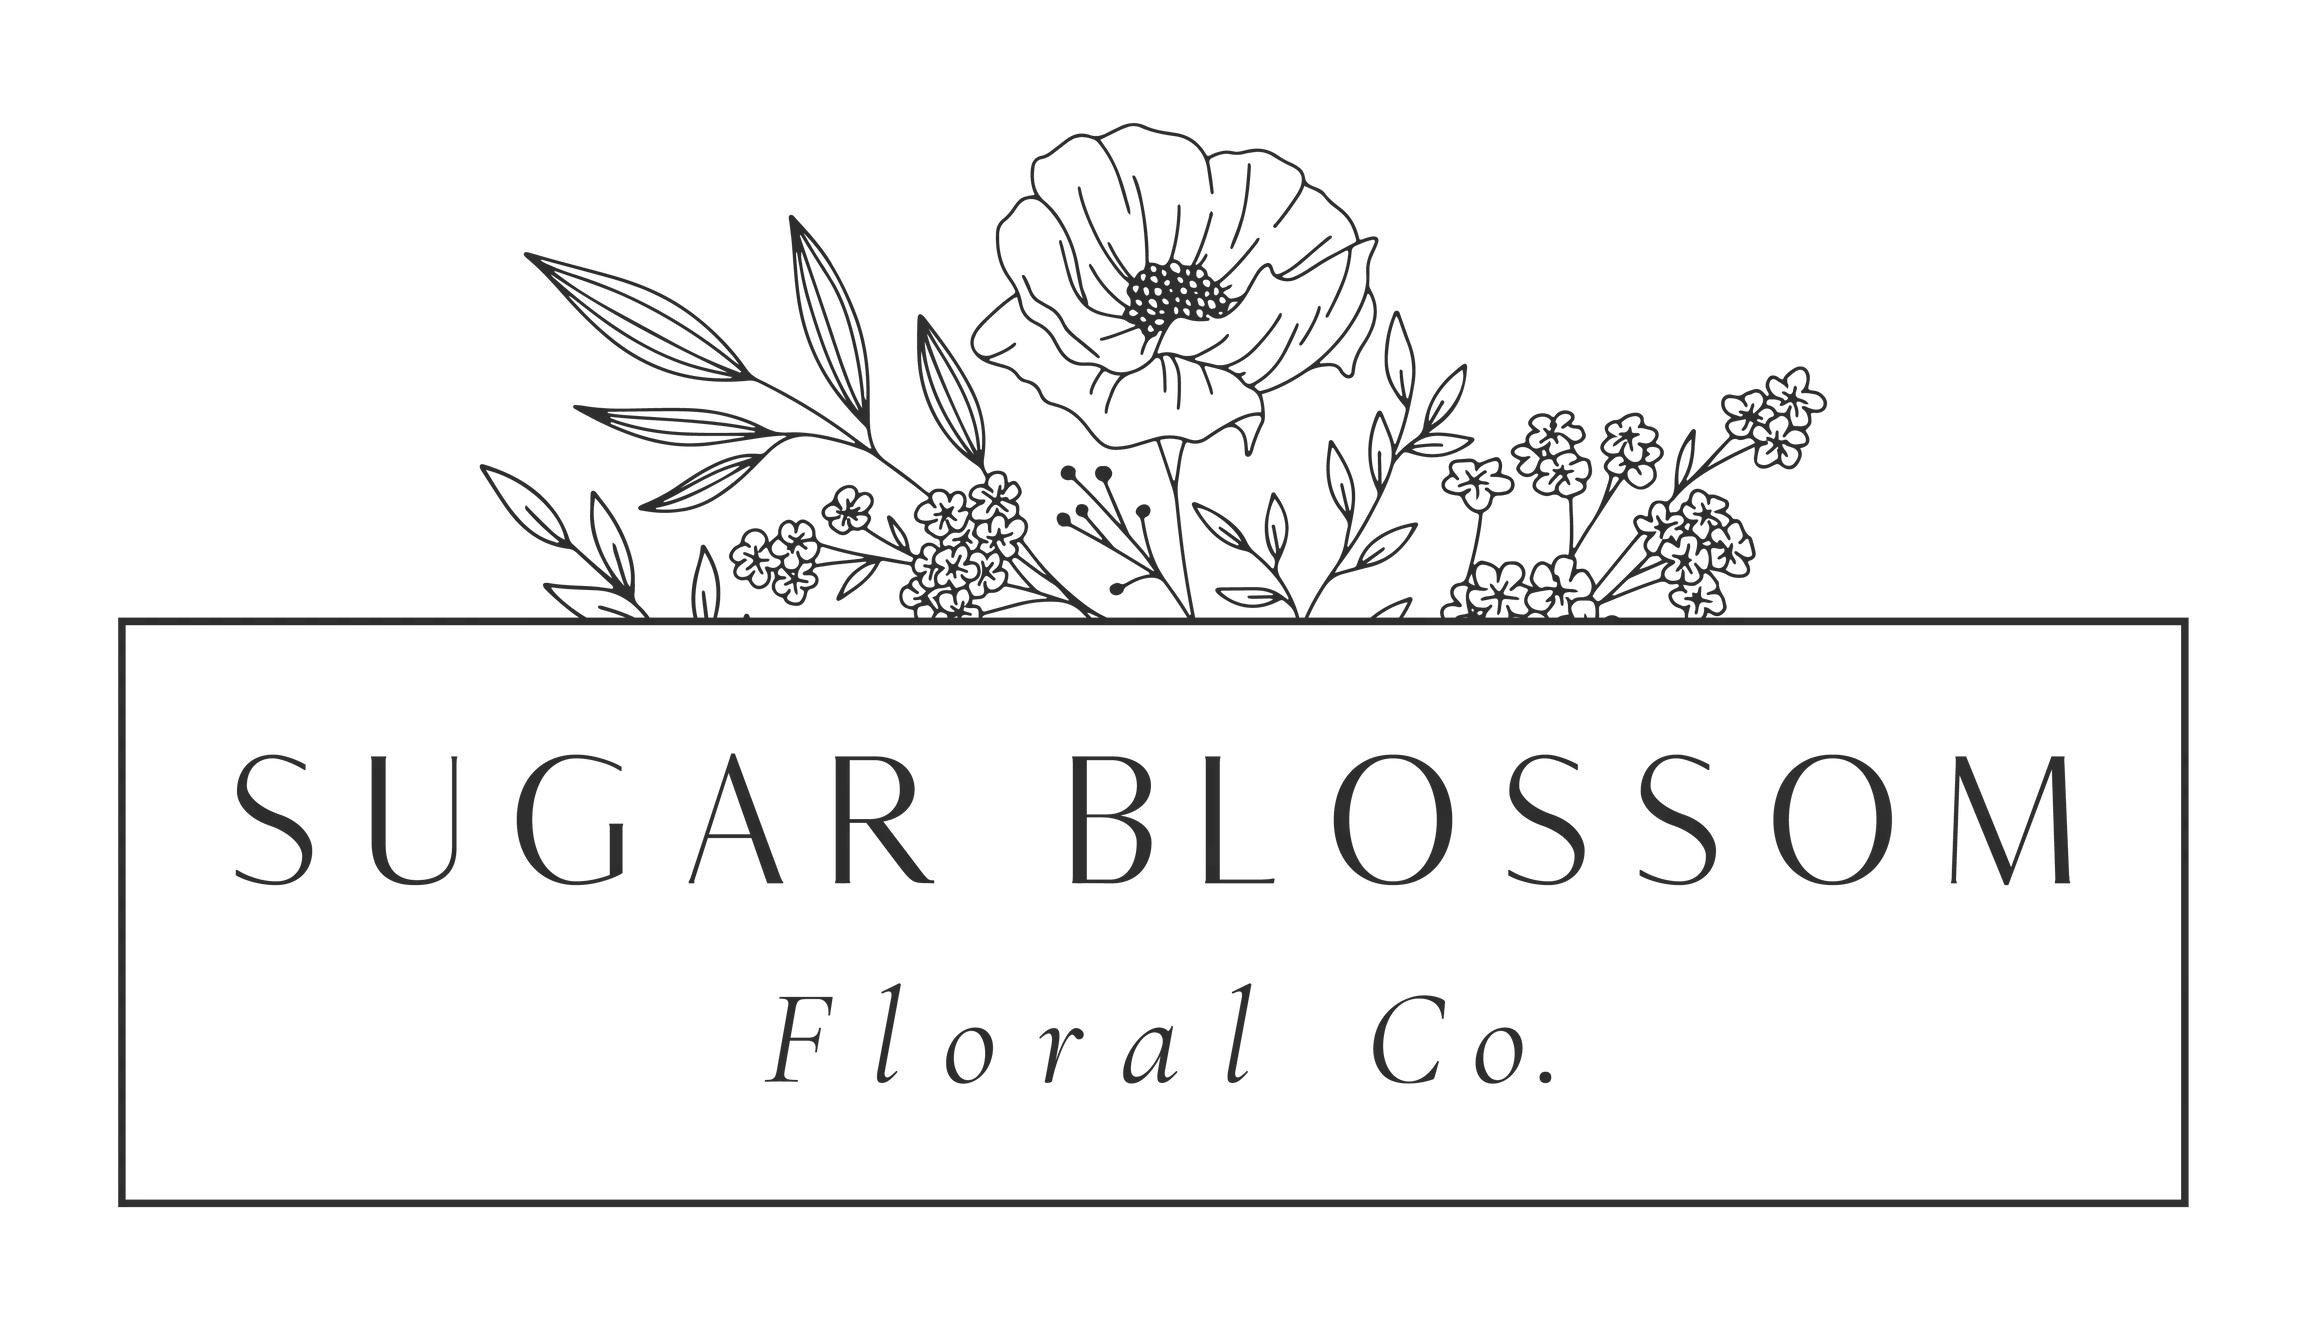 Sugar Blossom Floral Co.